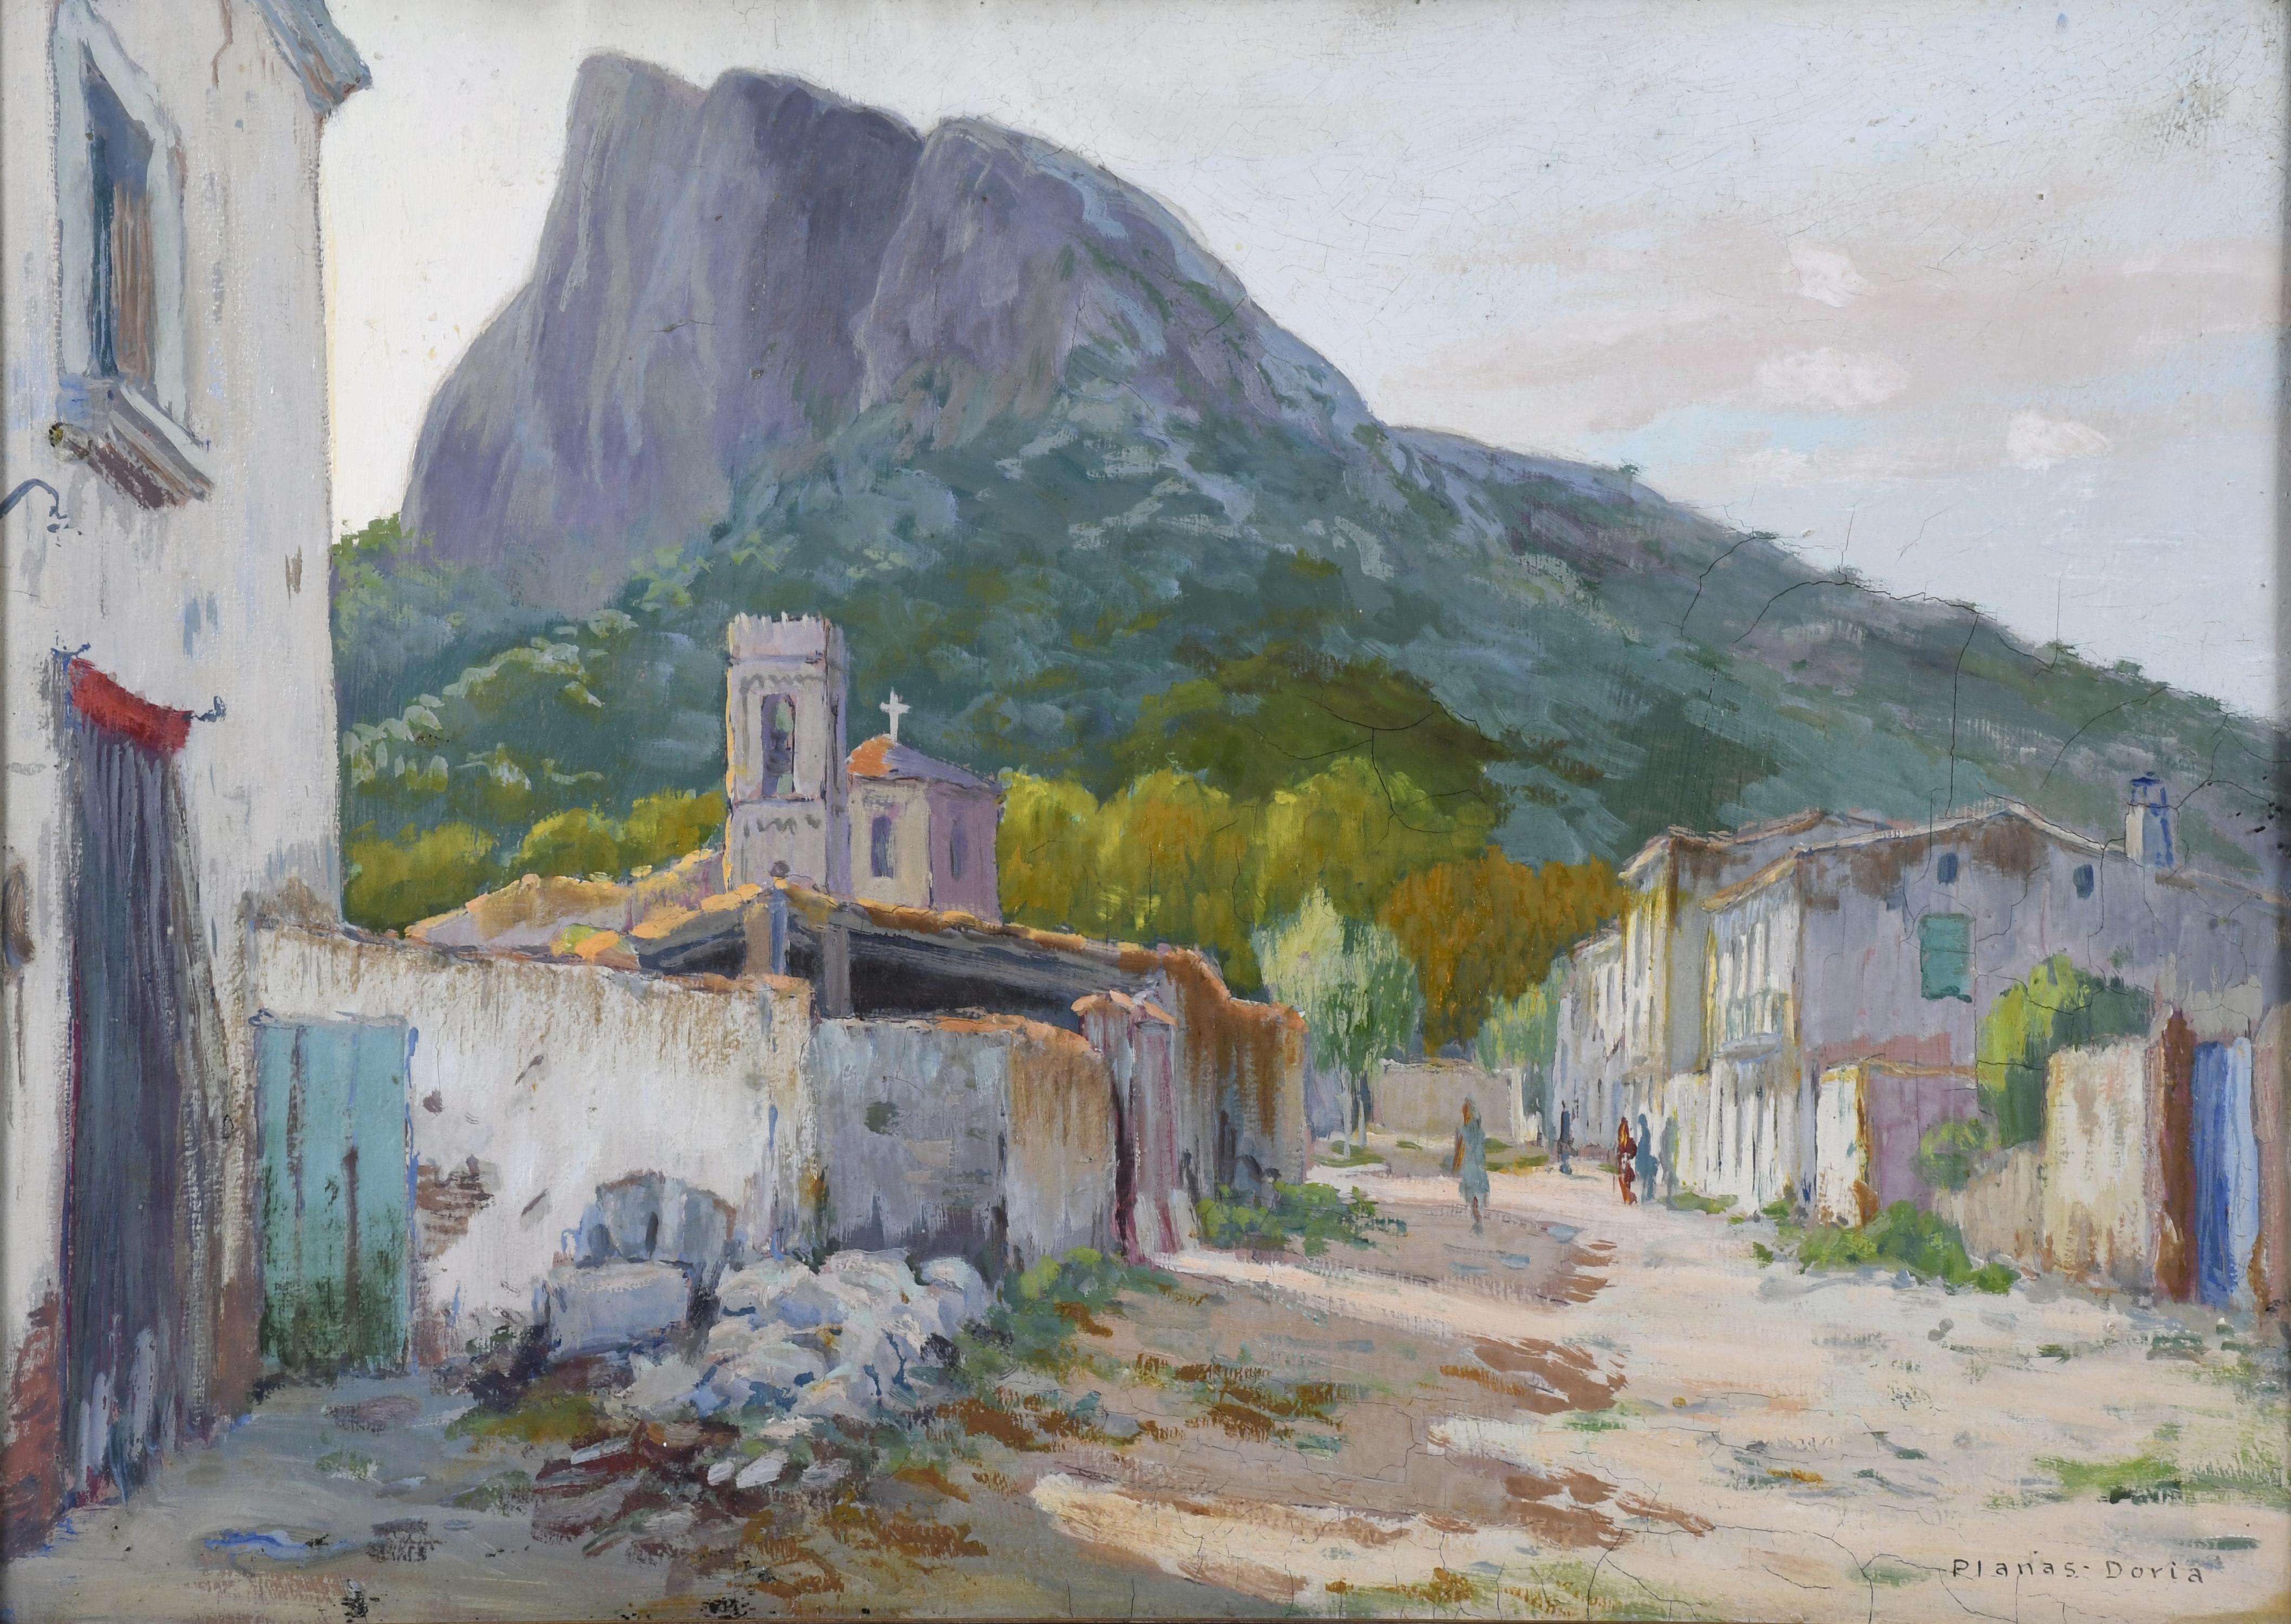  FRANCISCO PLANAS DORIA (1879-1955).  "ESTARTIT, ROCA MAURA